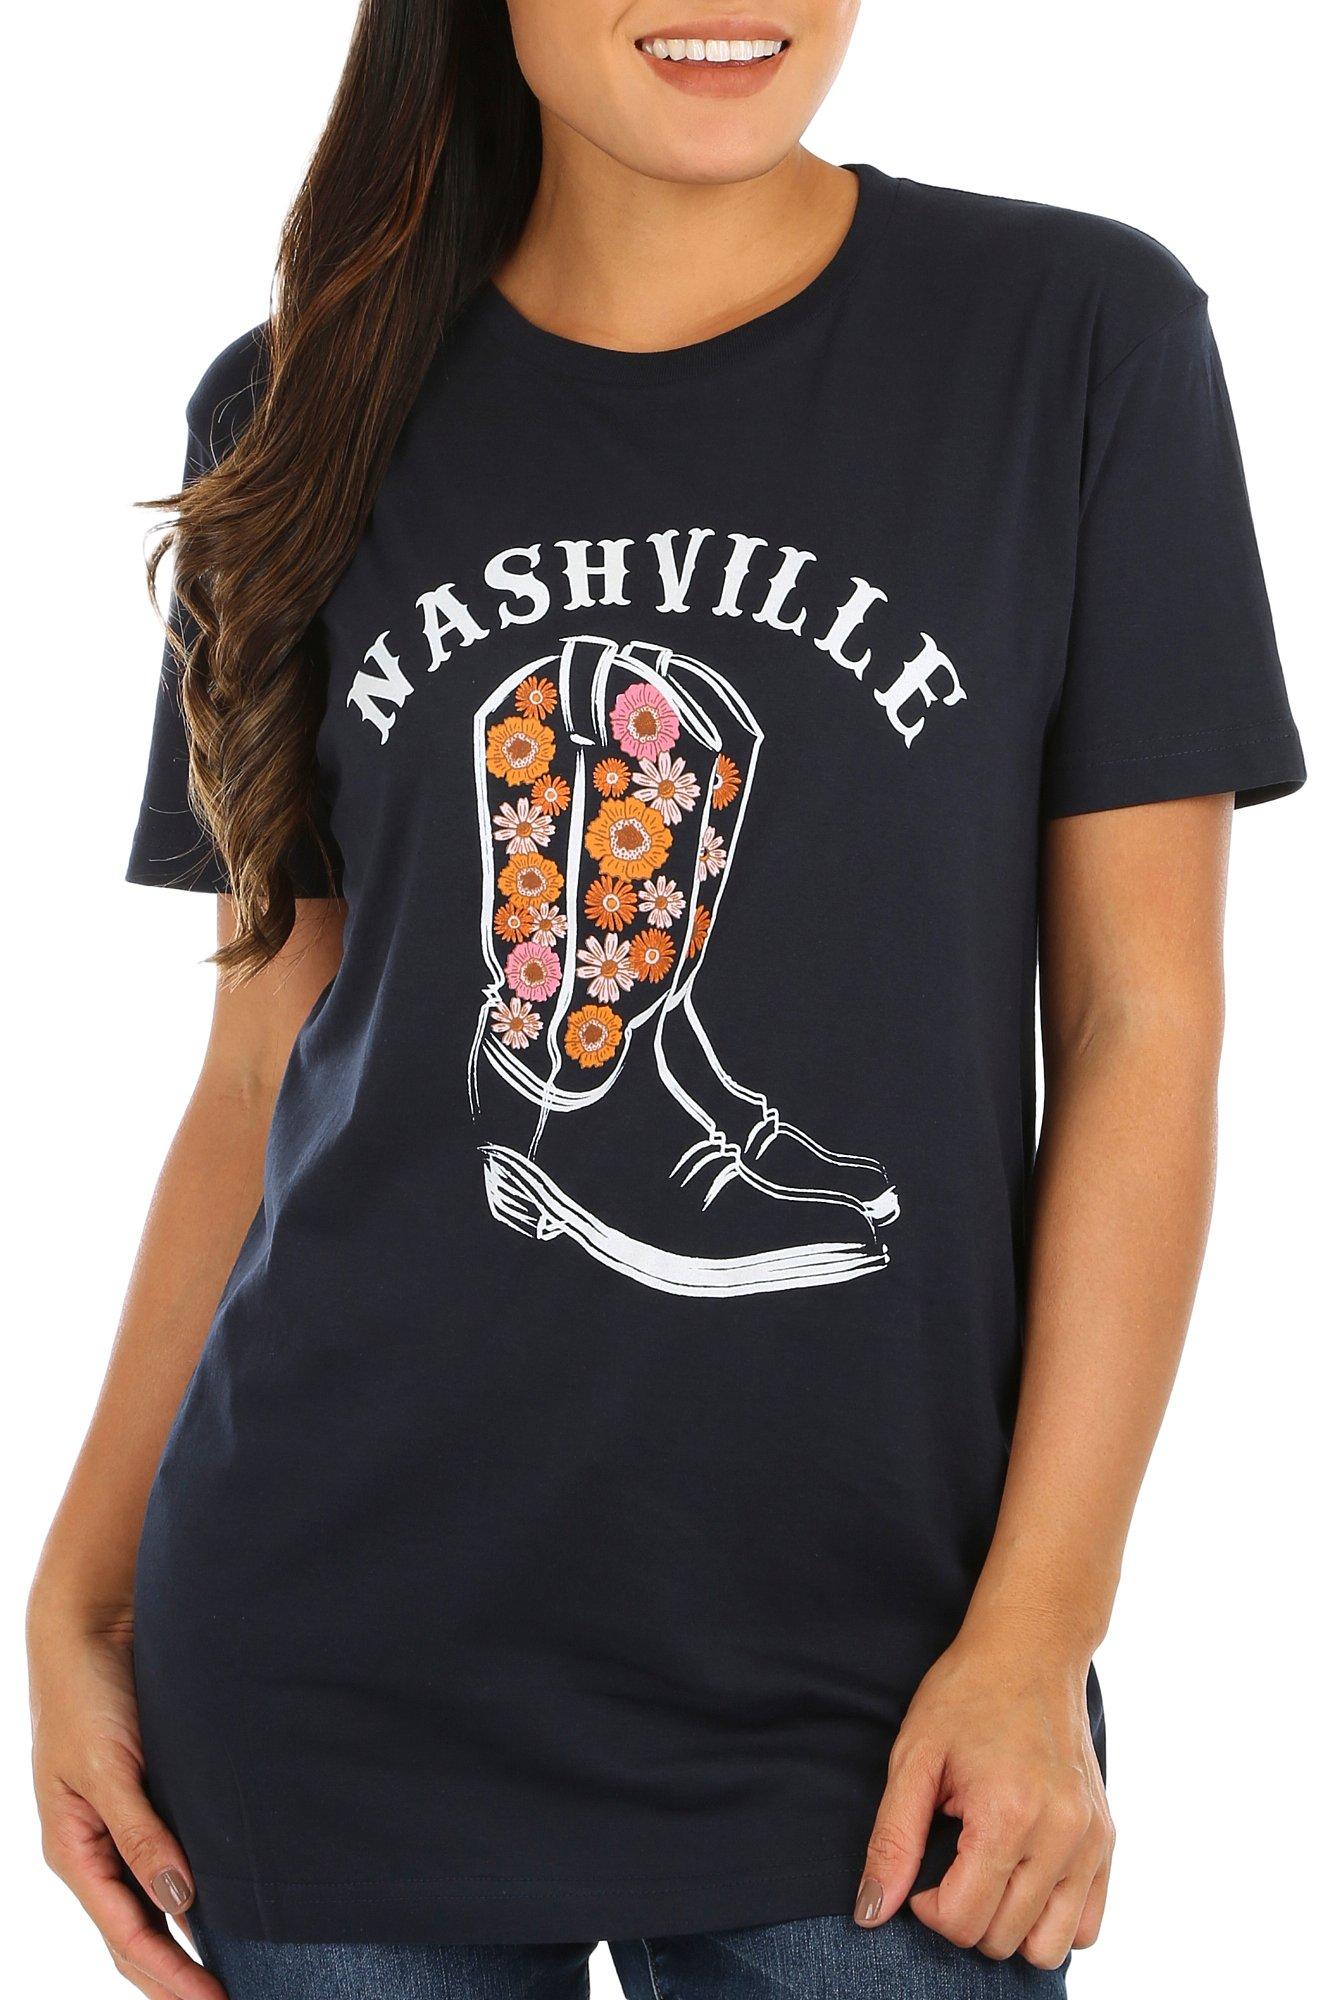 Womens Nashville Short Sleeve T-Shirt